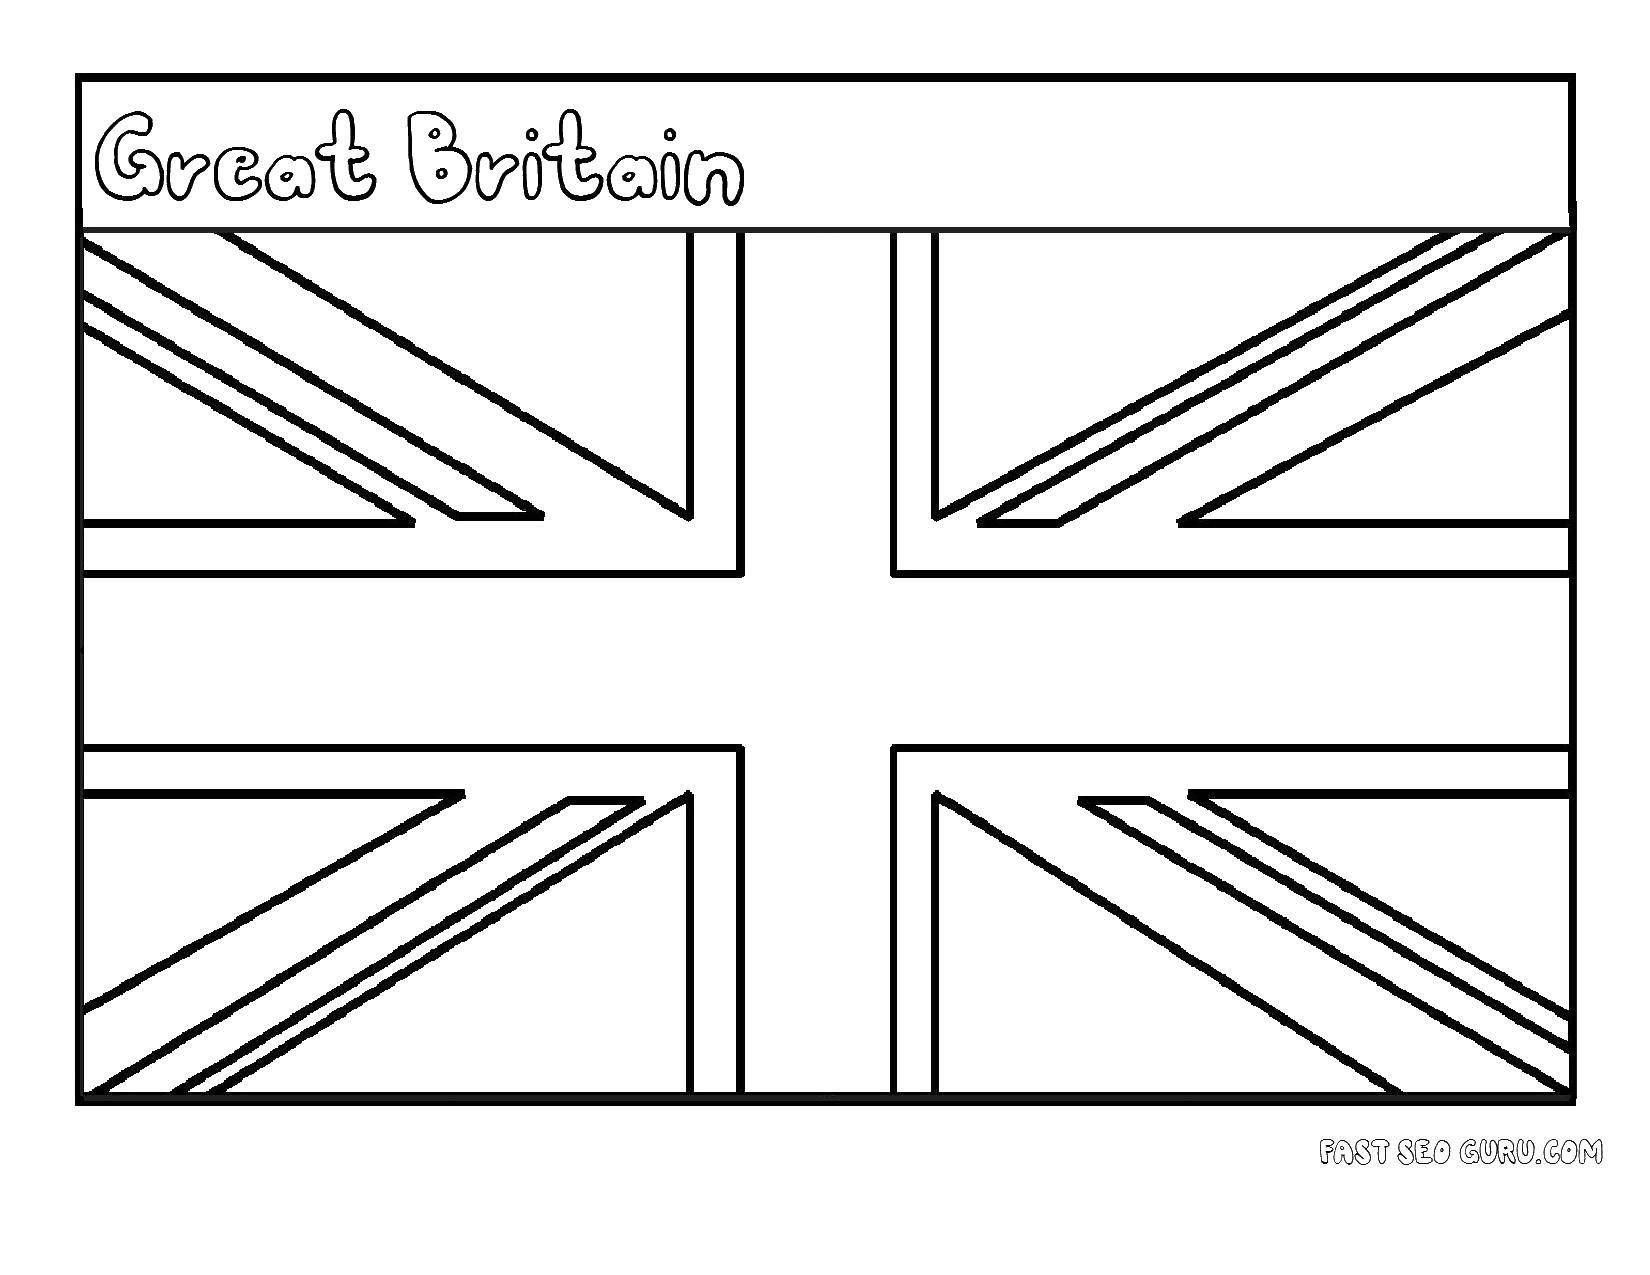 Название: Раскраска Флаг великобритании. Категория: Флаги. Теги: флаги, Британия, Великобритания.